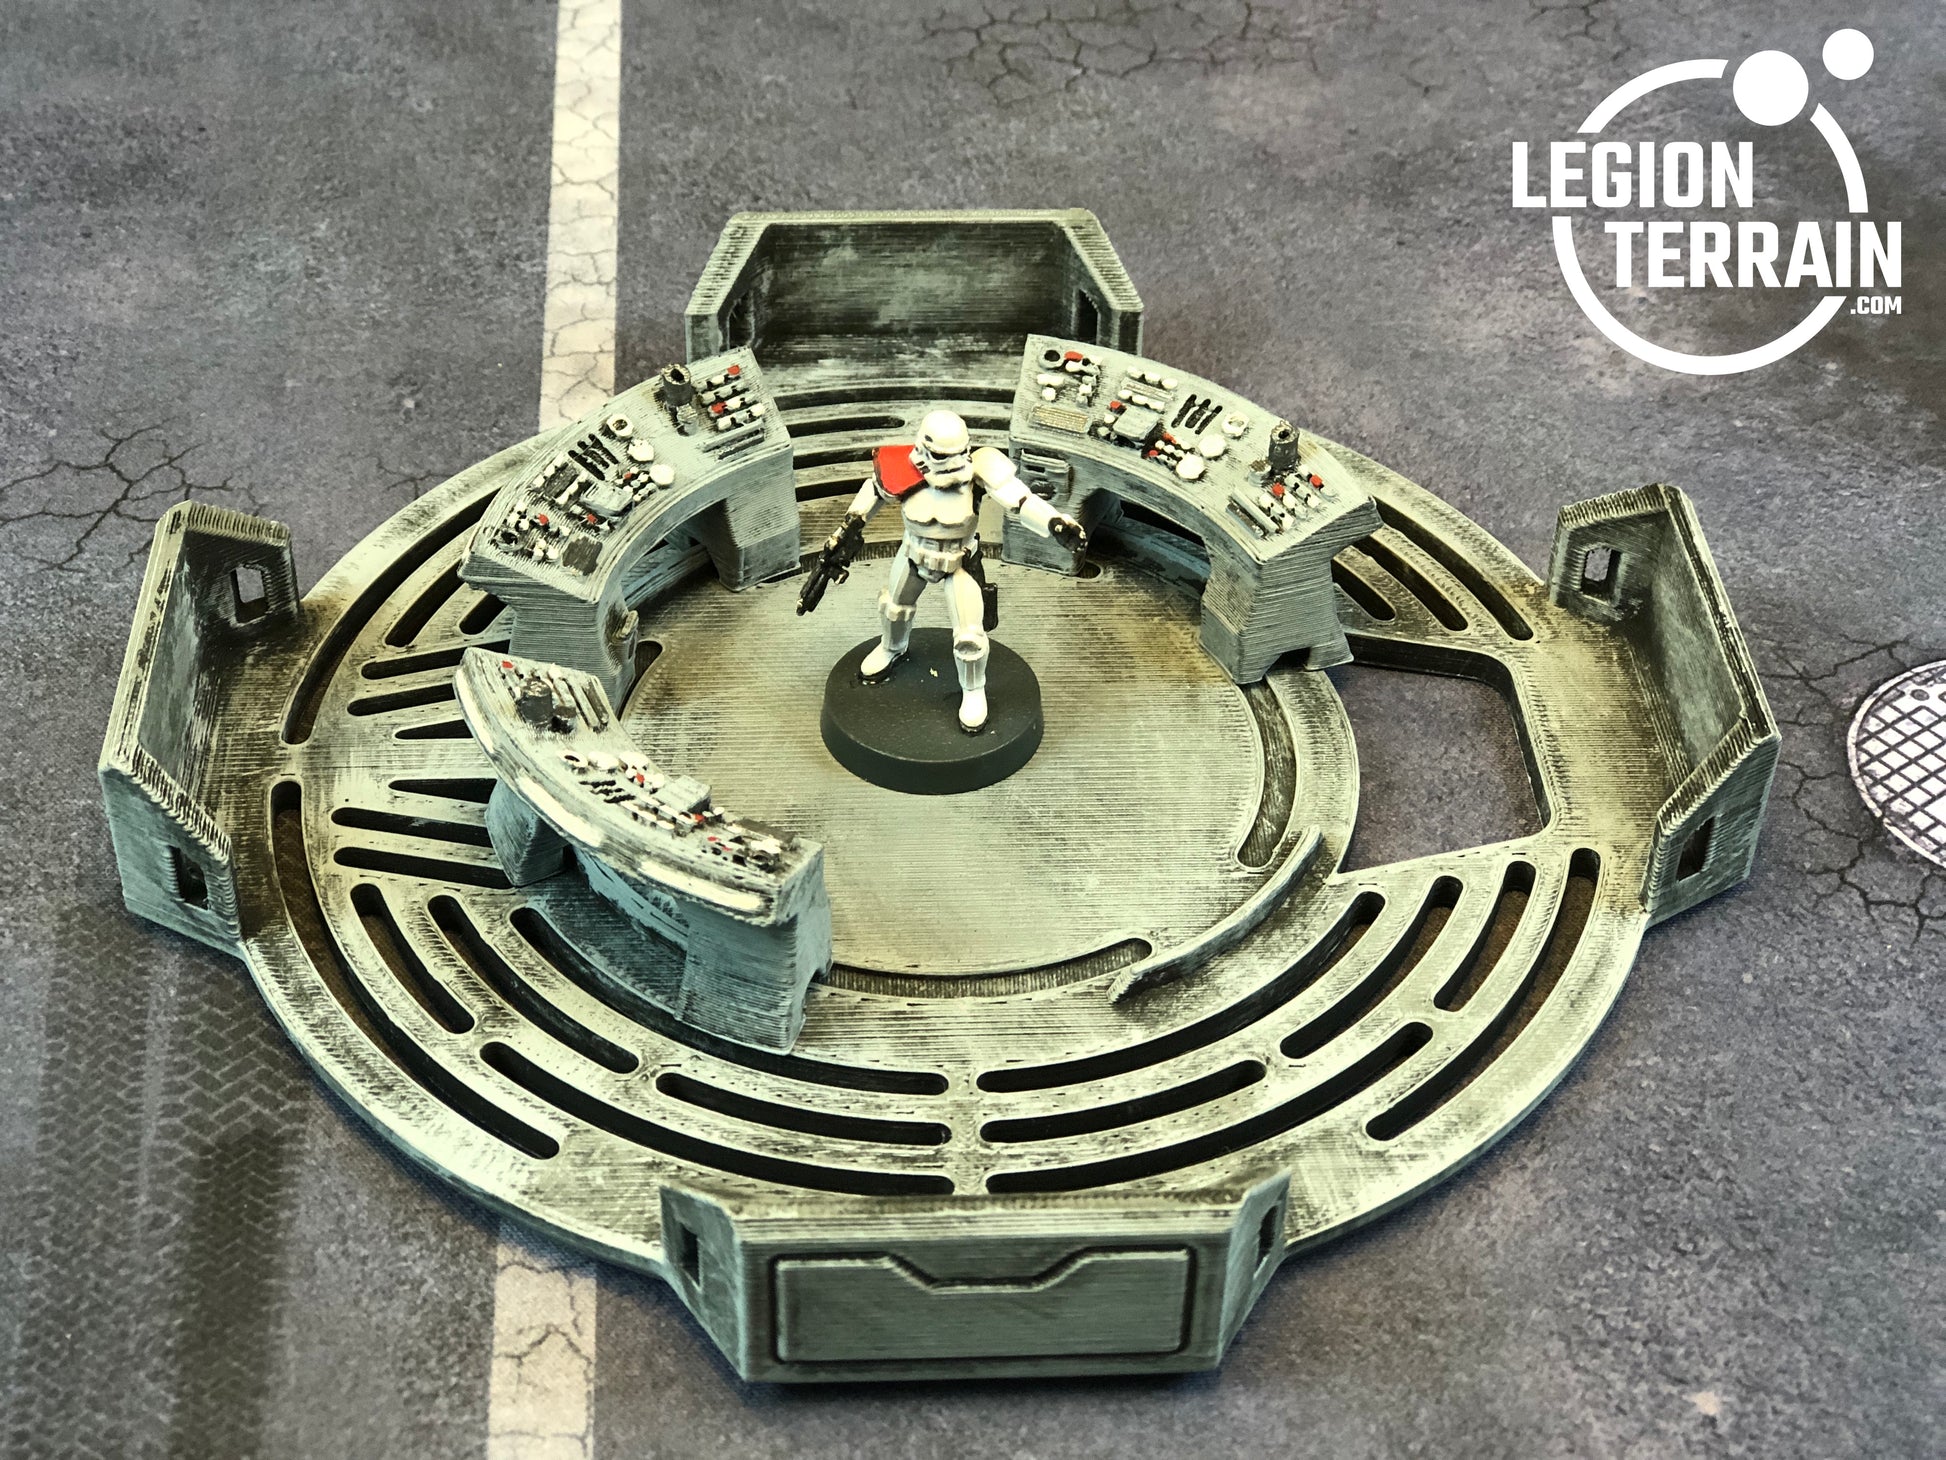 LegionTower Control Console - LegionTerrain